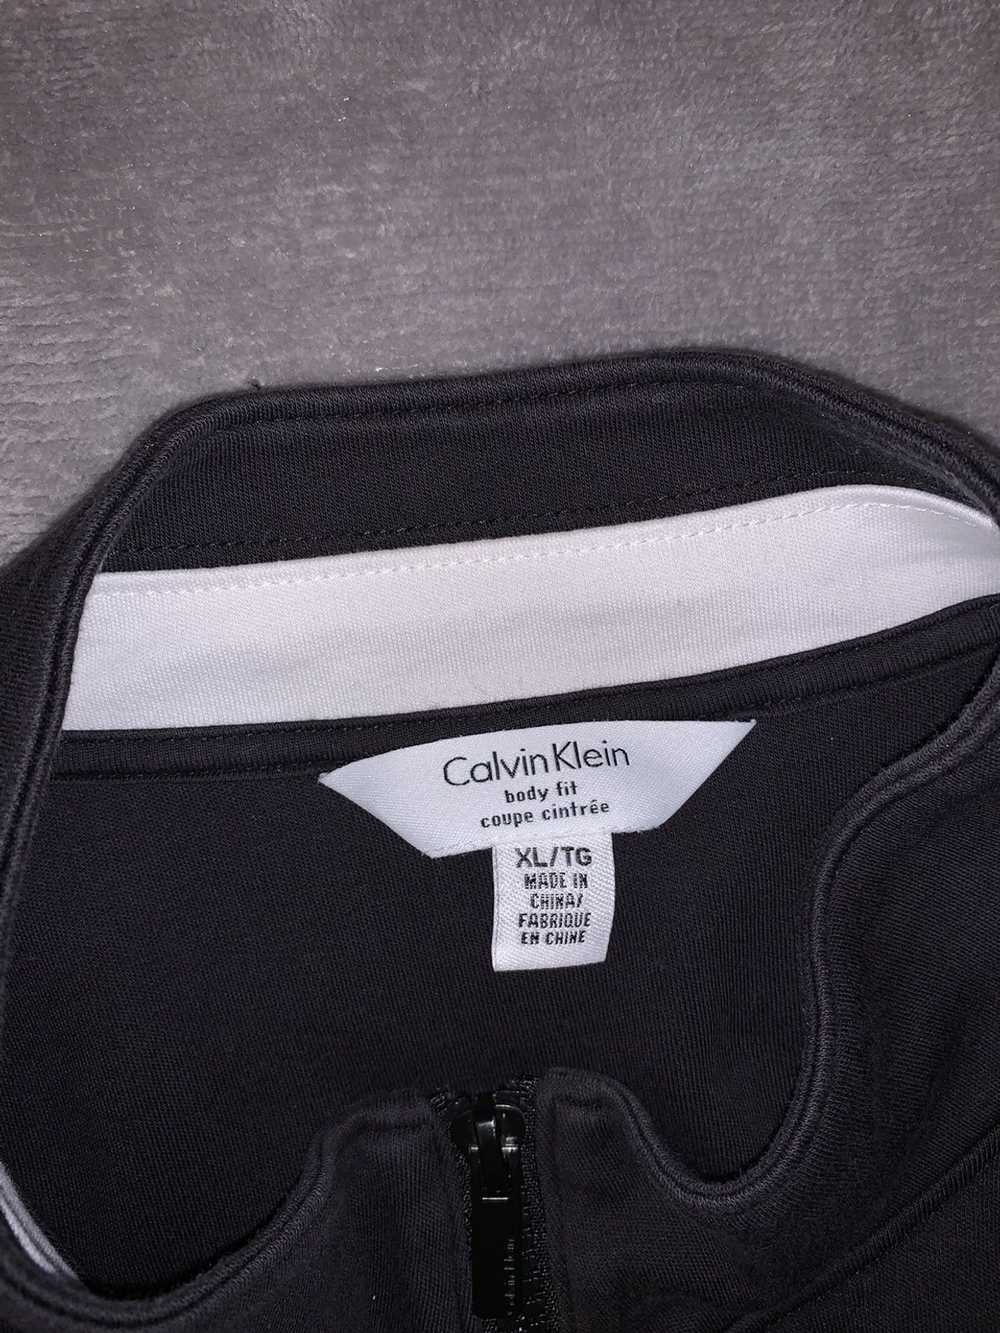 Calvin Klein Calvin Klein Light Jacket - image 2